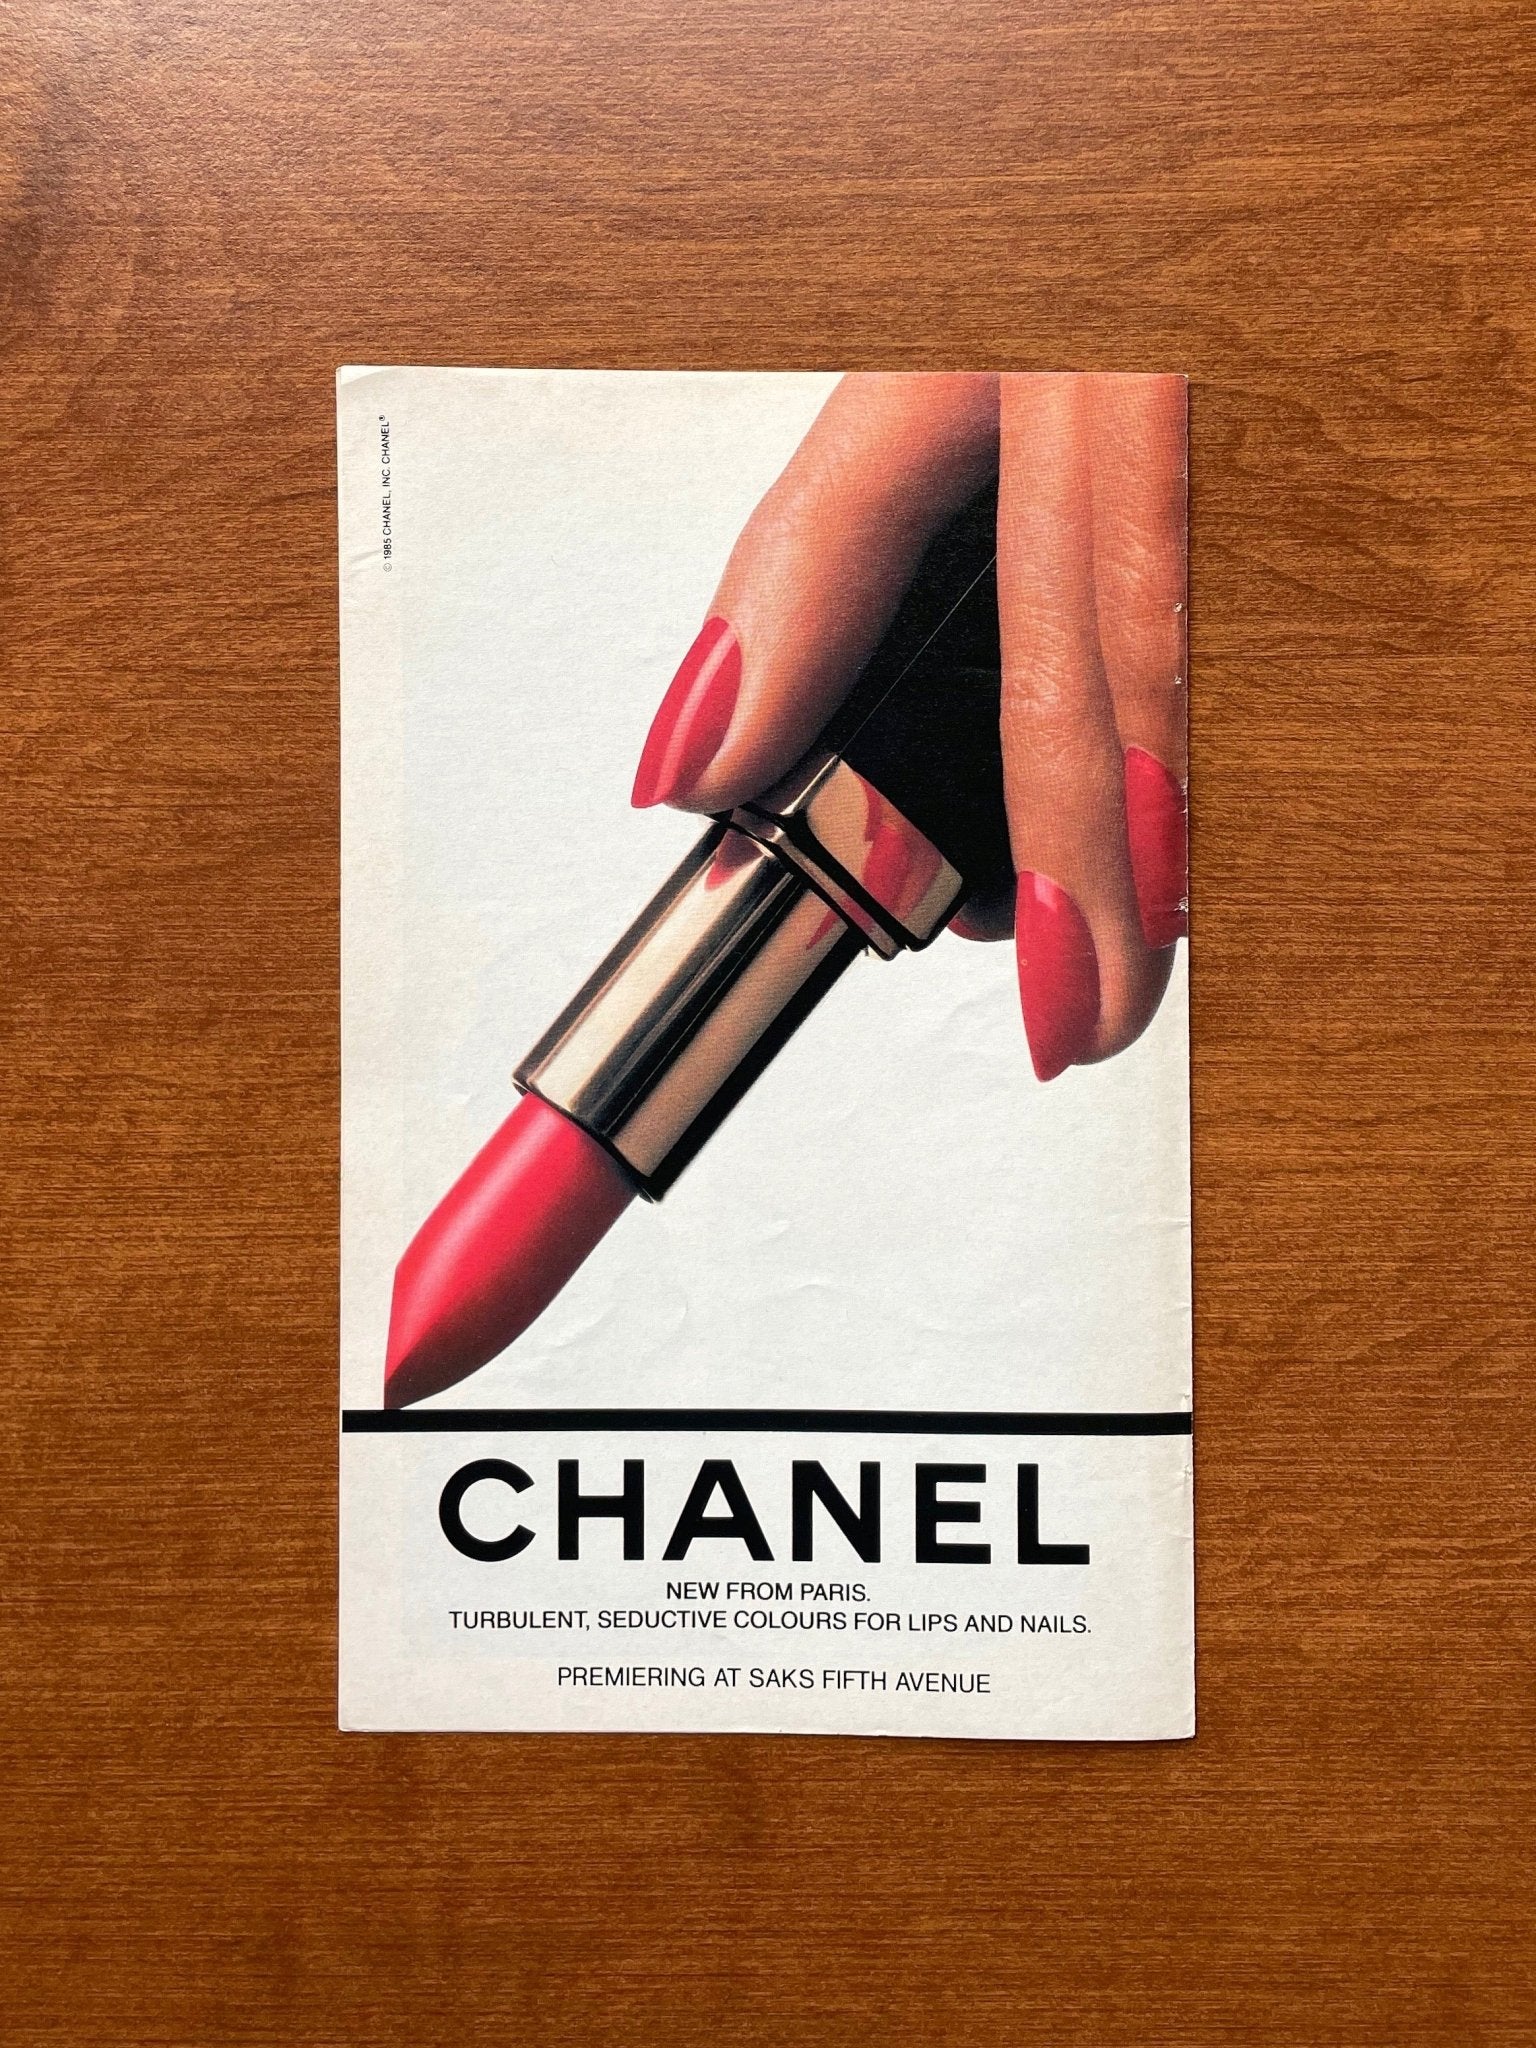 Chanel Lipstick Advertisement